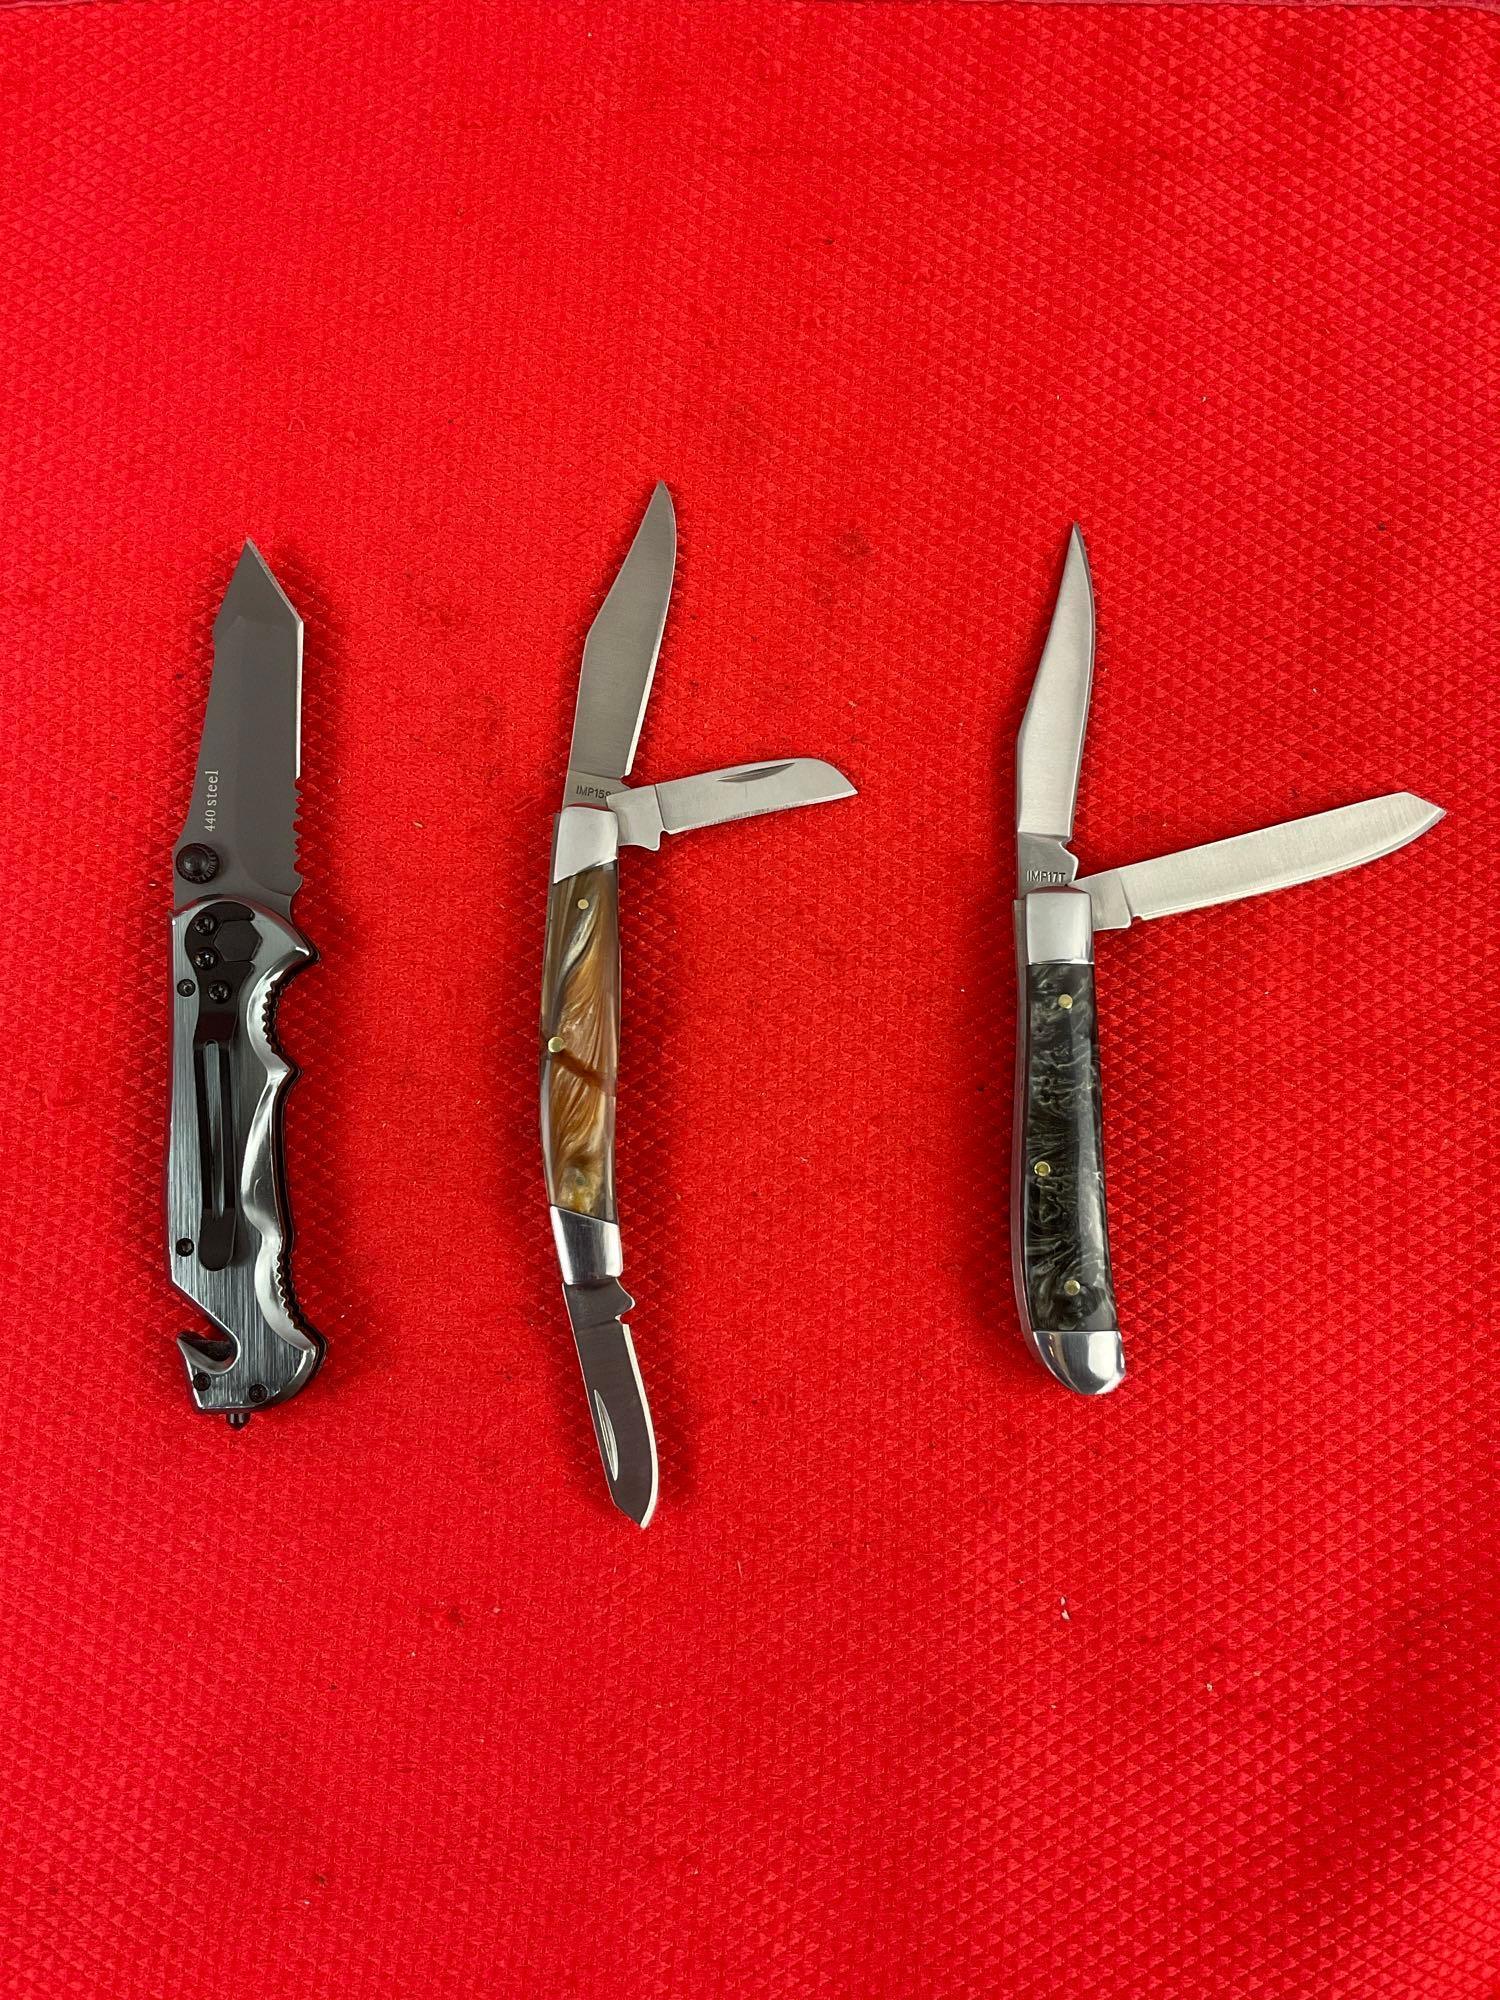 3 pcs Steel Folding Blade Pocket Knife Assortment. 2x Schrade Imperial, 1x SOG. NIB. See pics.